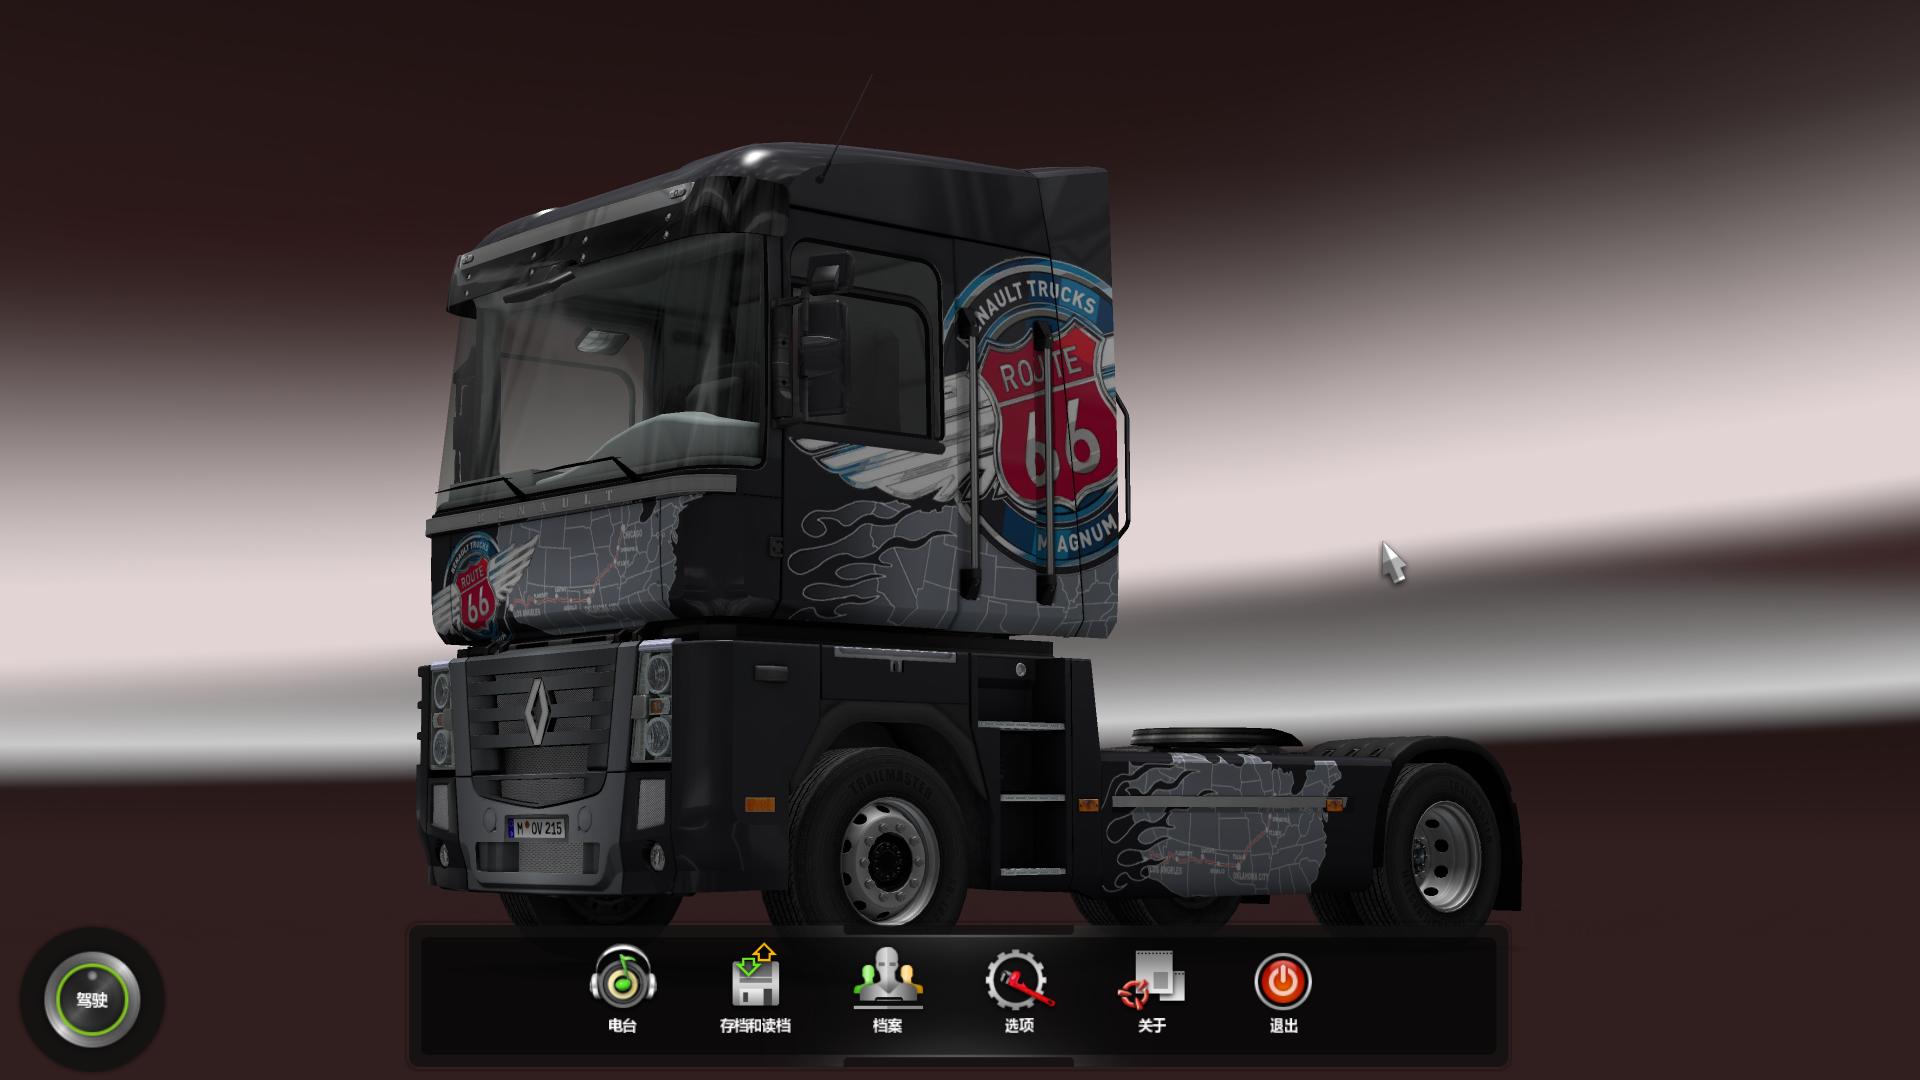 ŷ޿ģ2Euro Truck Simulator 2ˮϳMOD